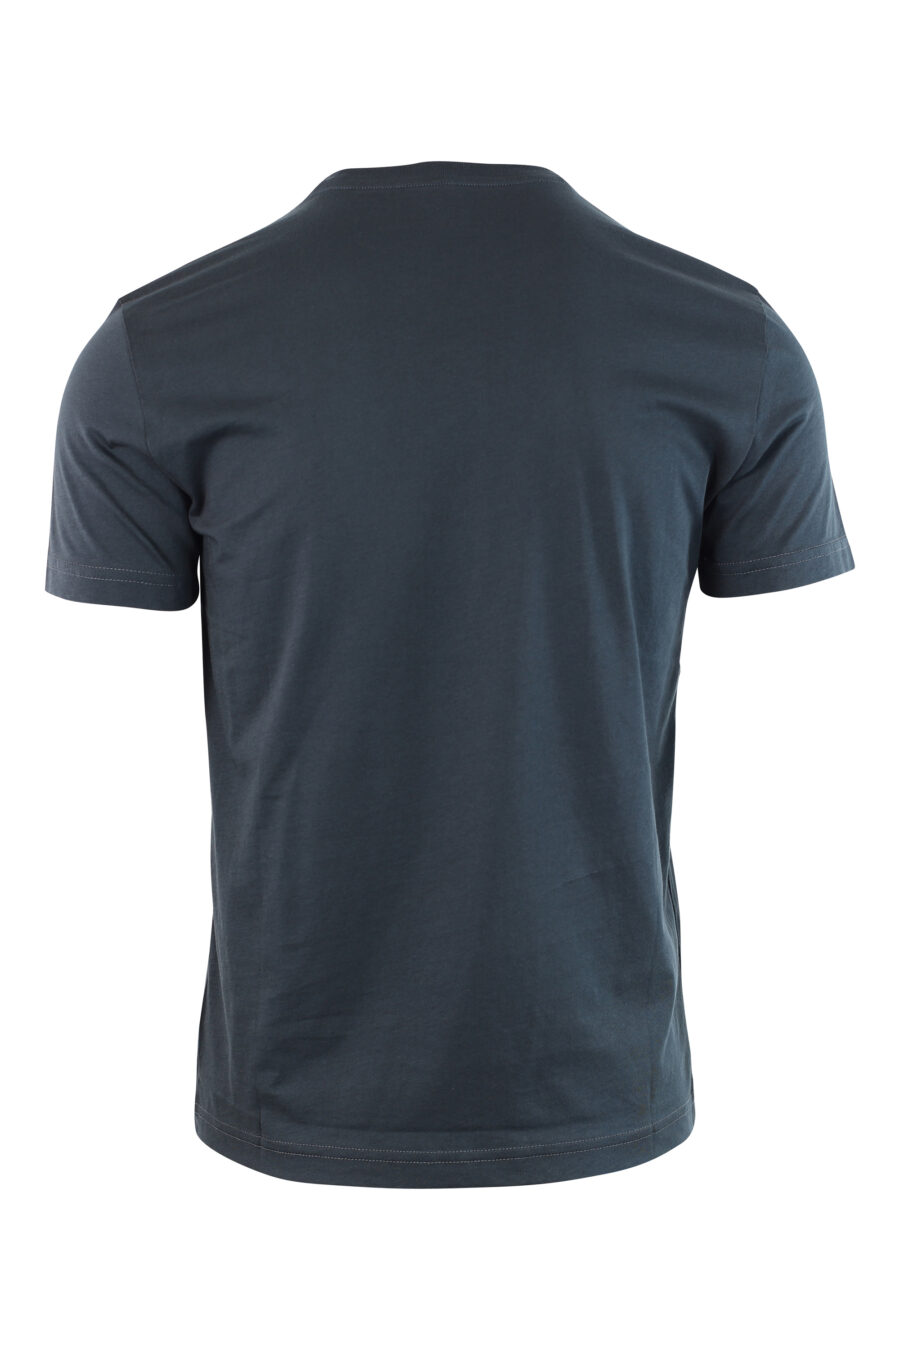 Blaues T-Shirt mit Mini-Gummiabzeichen - IMG 3768